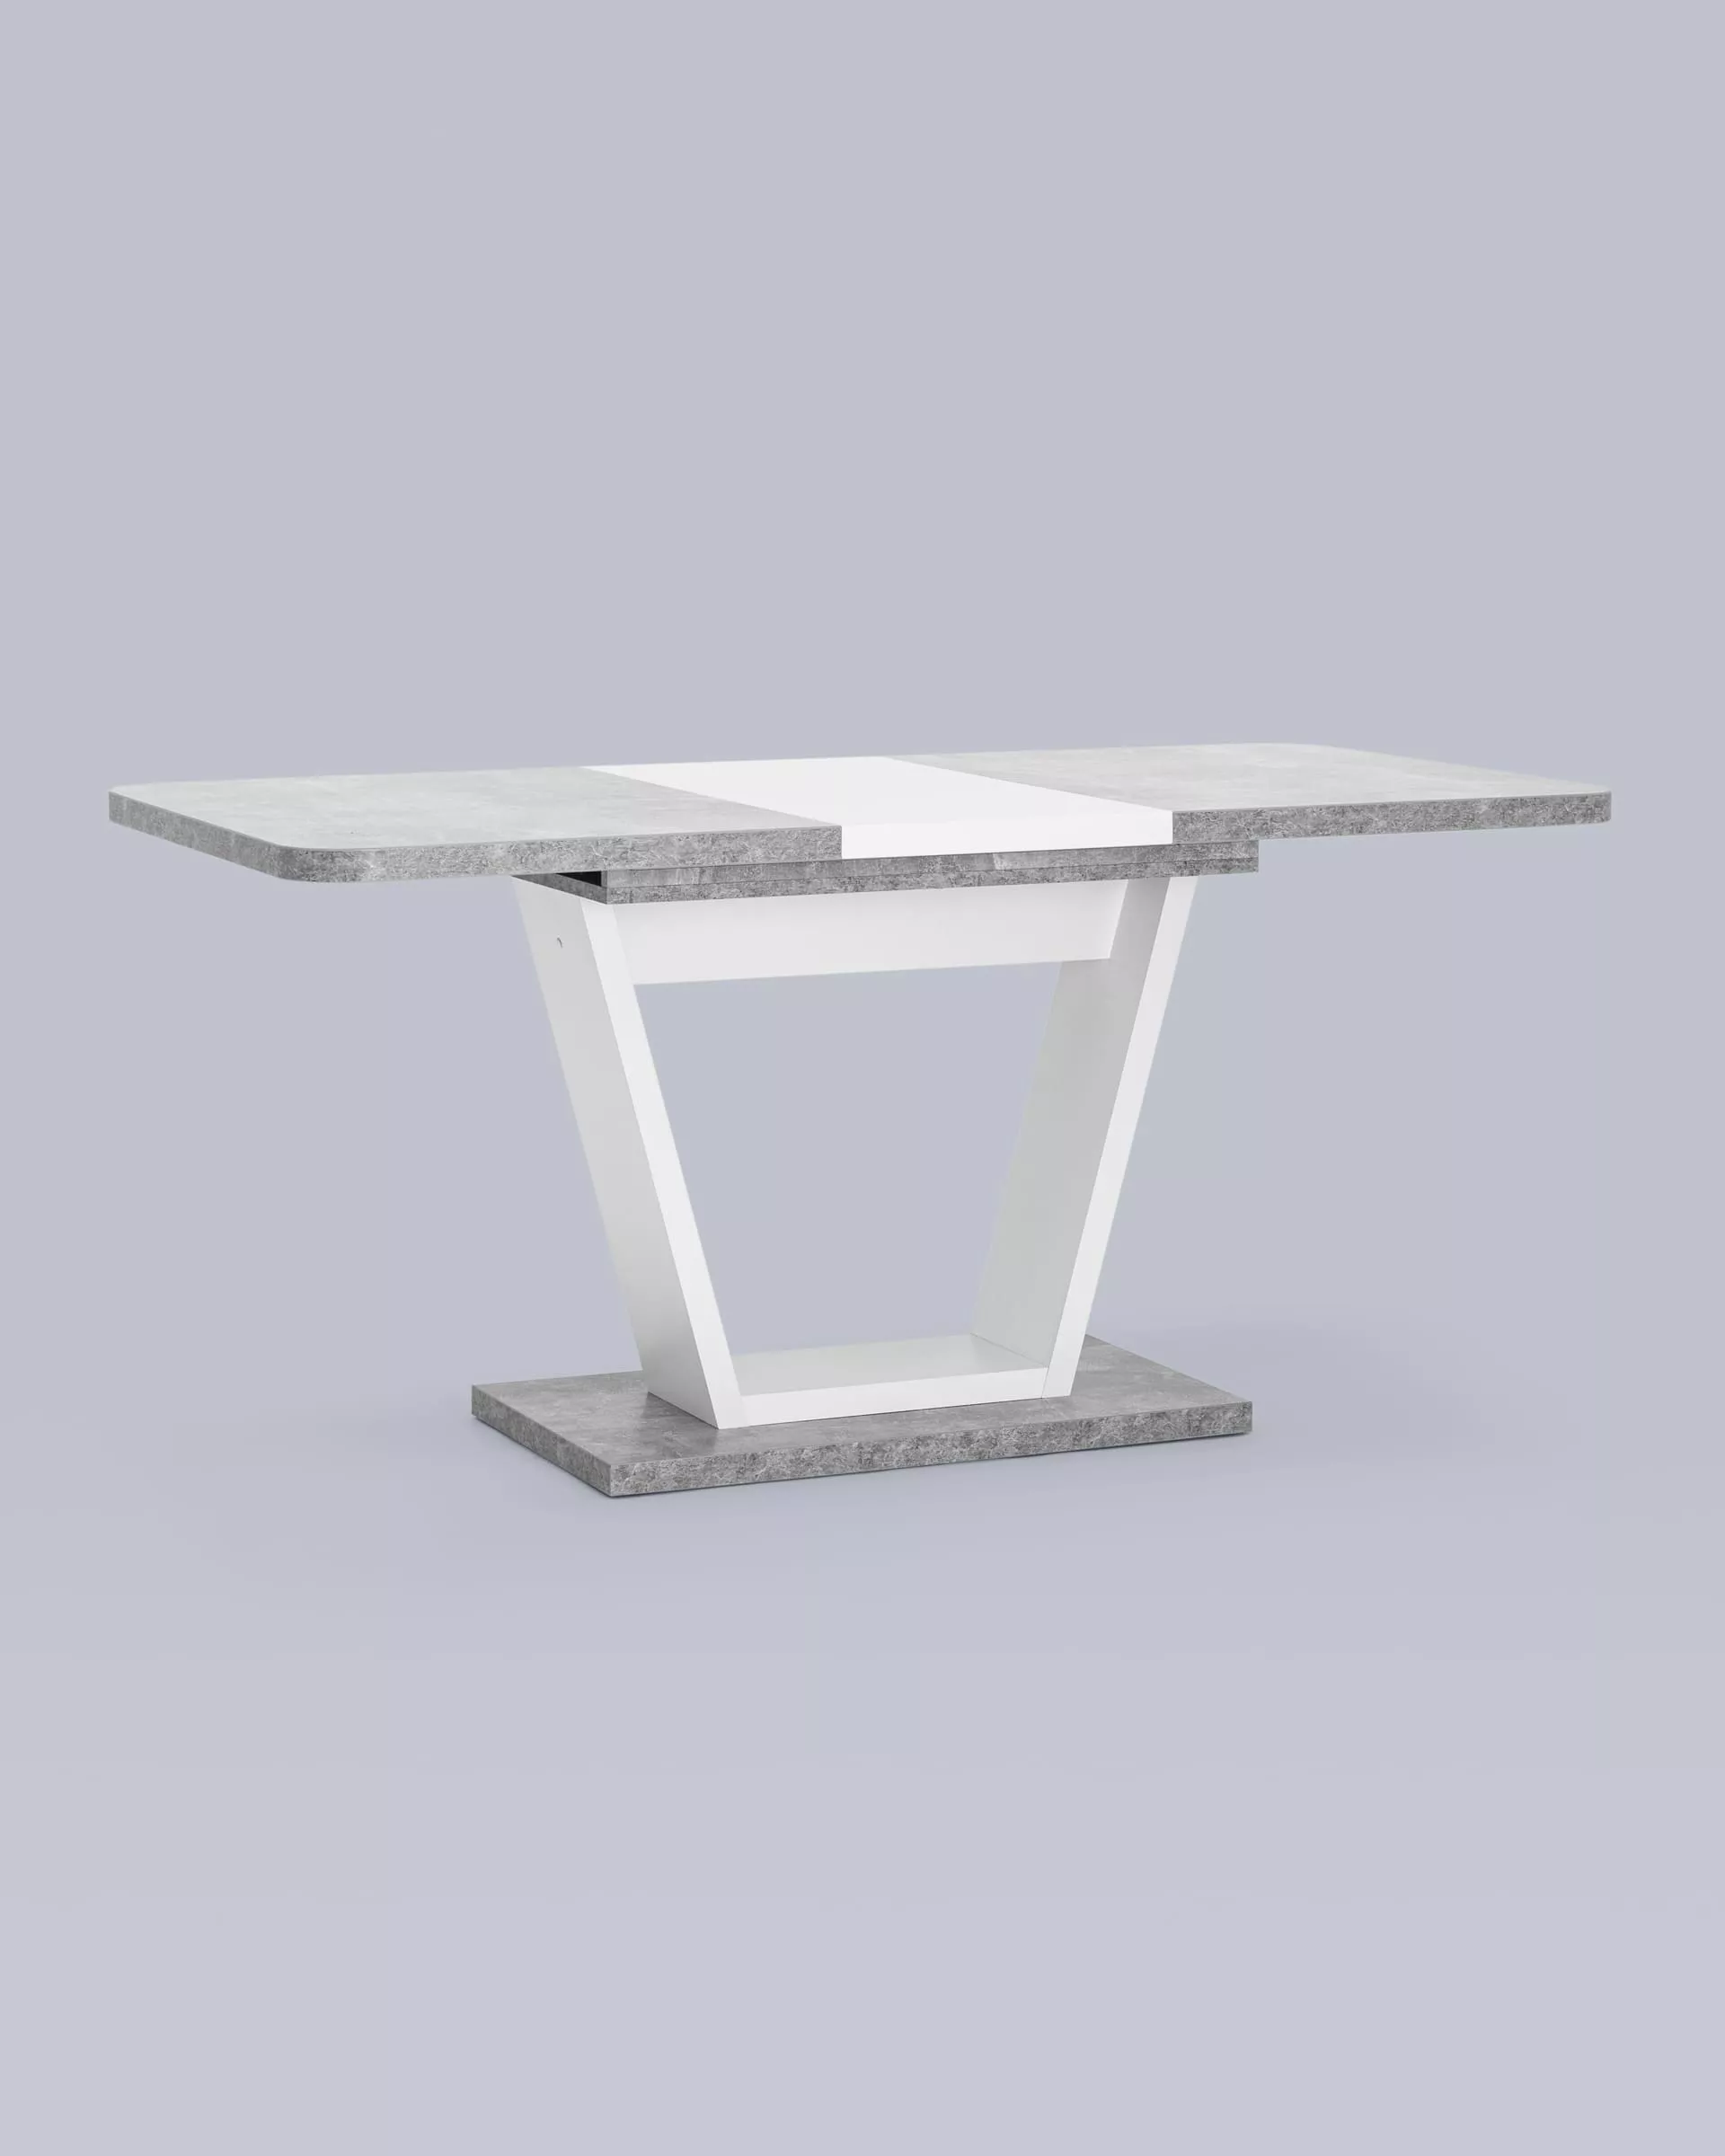 Стол обеденный Vector 120х80 бетон / белый раздвижной